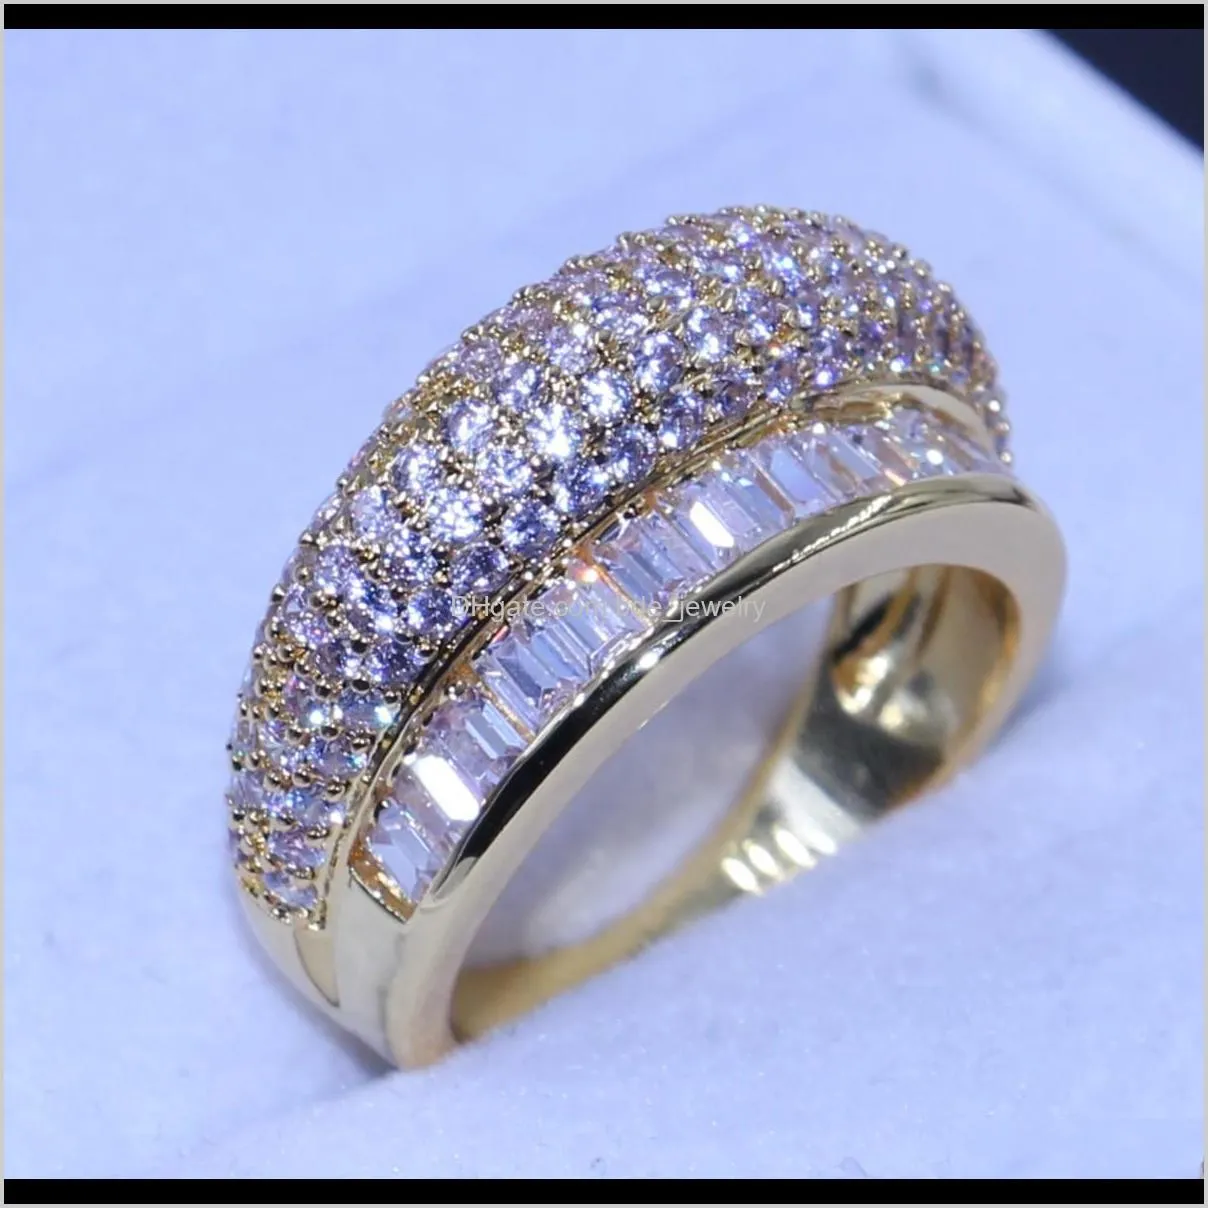 victoria wieck pave setting new women fashion jewelry 10kt gold filled princess white sapphire party cz diamond lady` wedding band ring